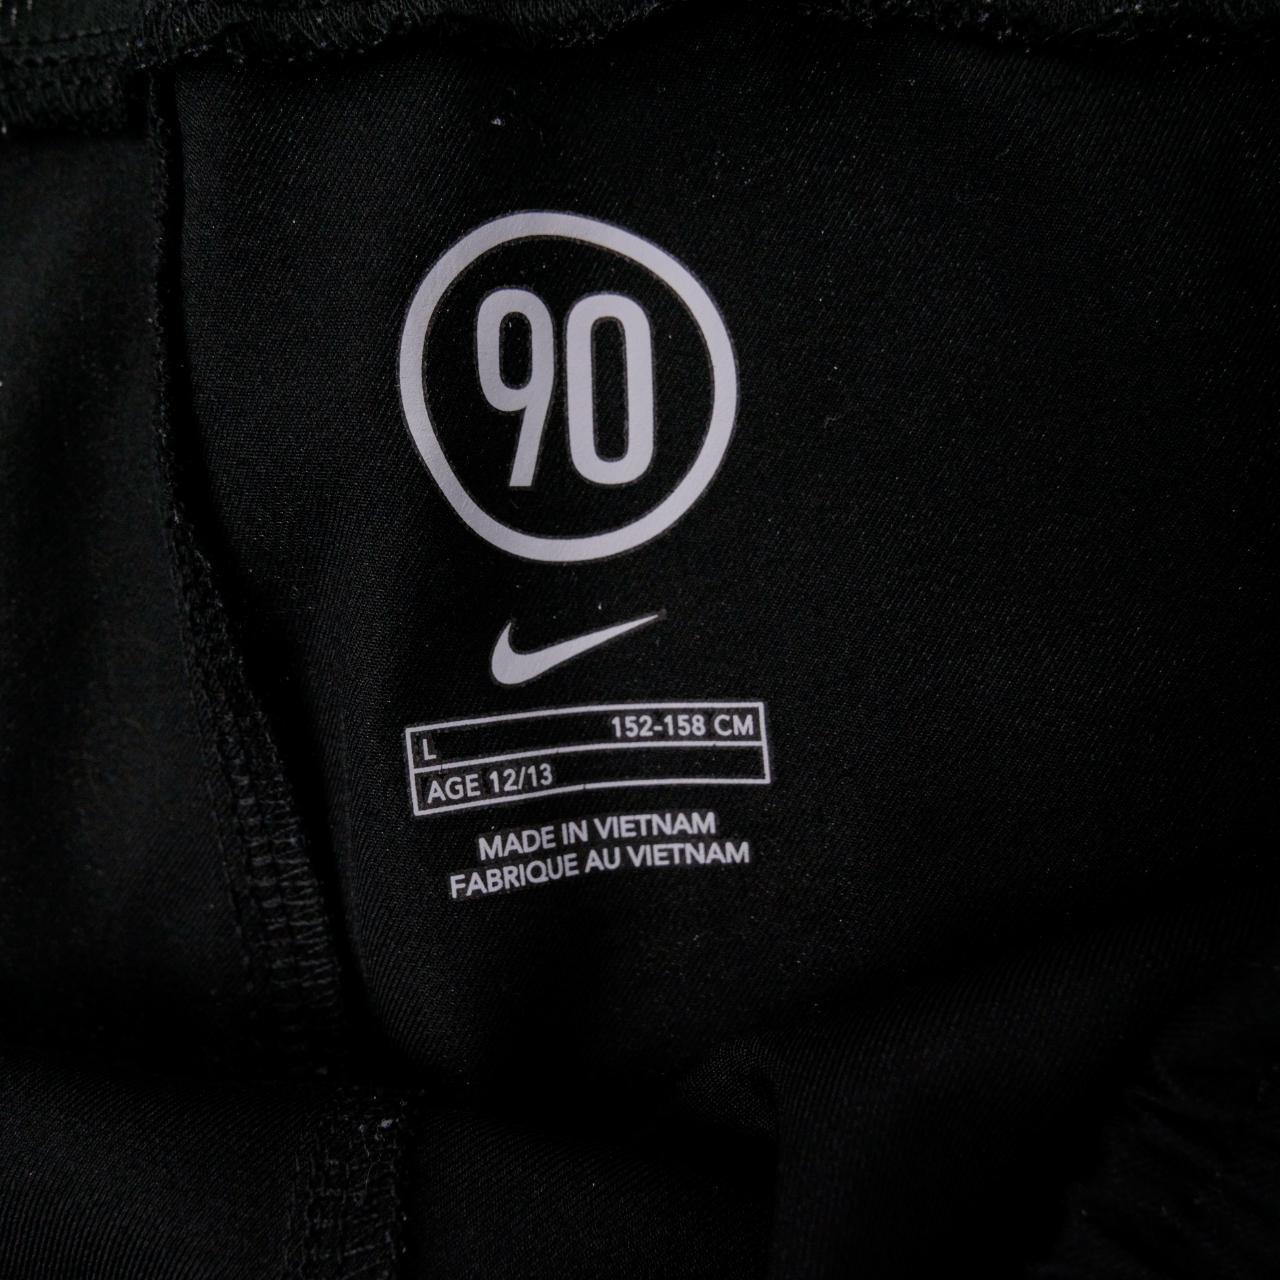 Vintage Nike 90 Shorts Size W30 - Known Source